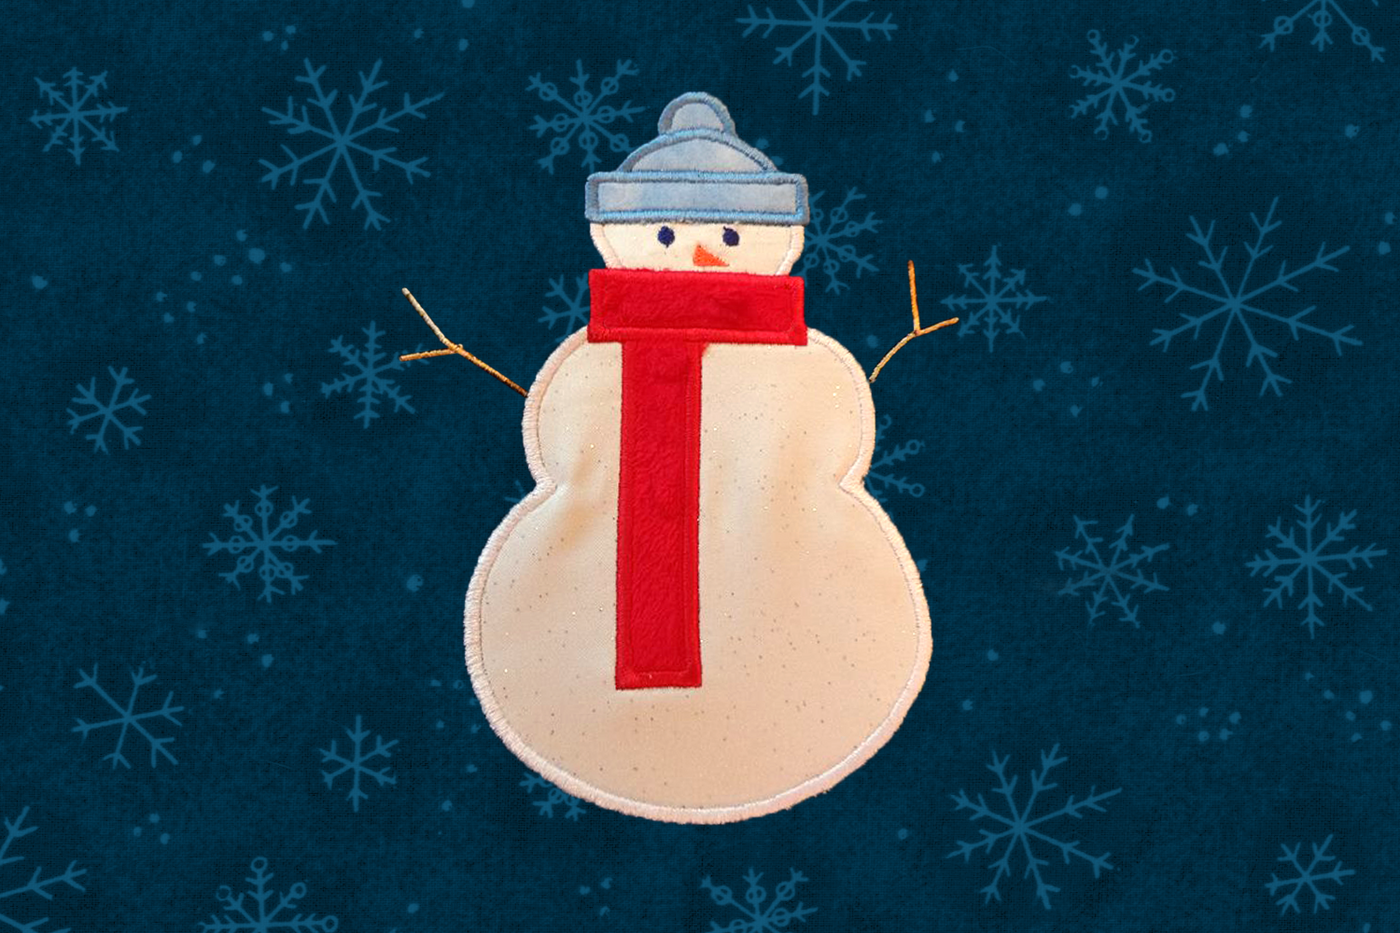 Snowman with a scarf applique design